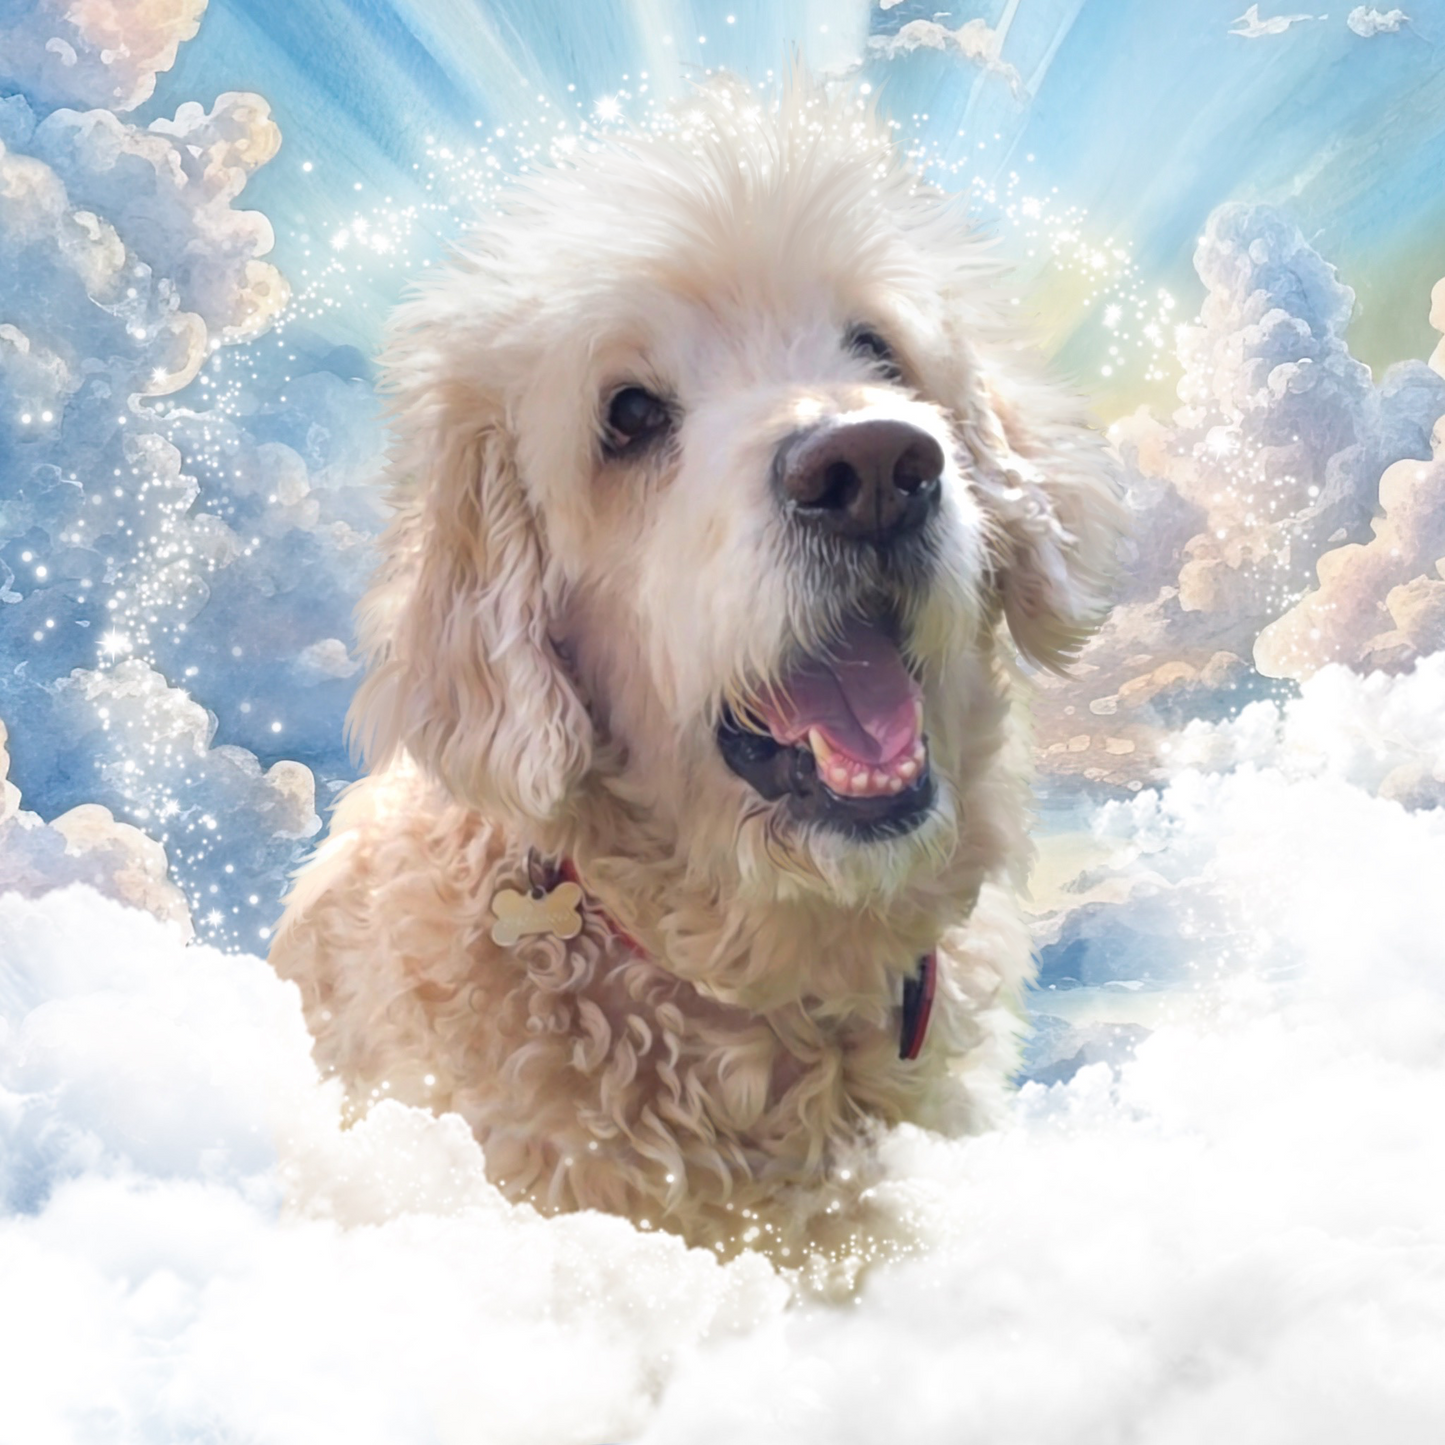 The loss of a pet edit - My Angel in Heaven - Personalised Pet Portrait, Memorial